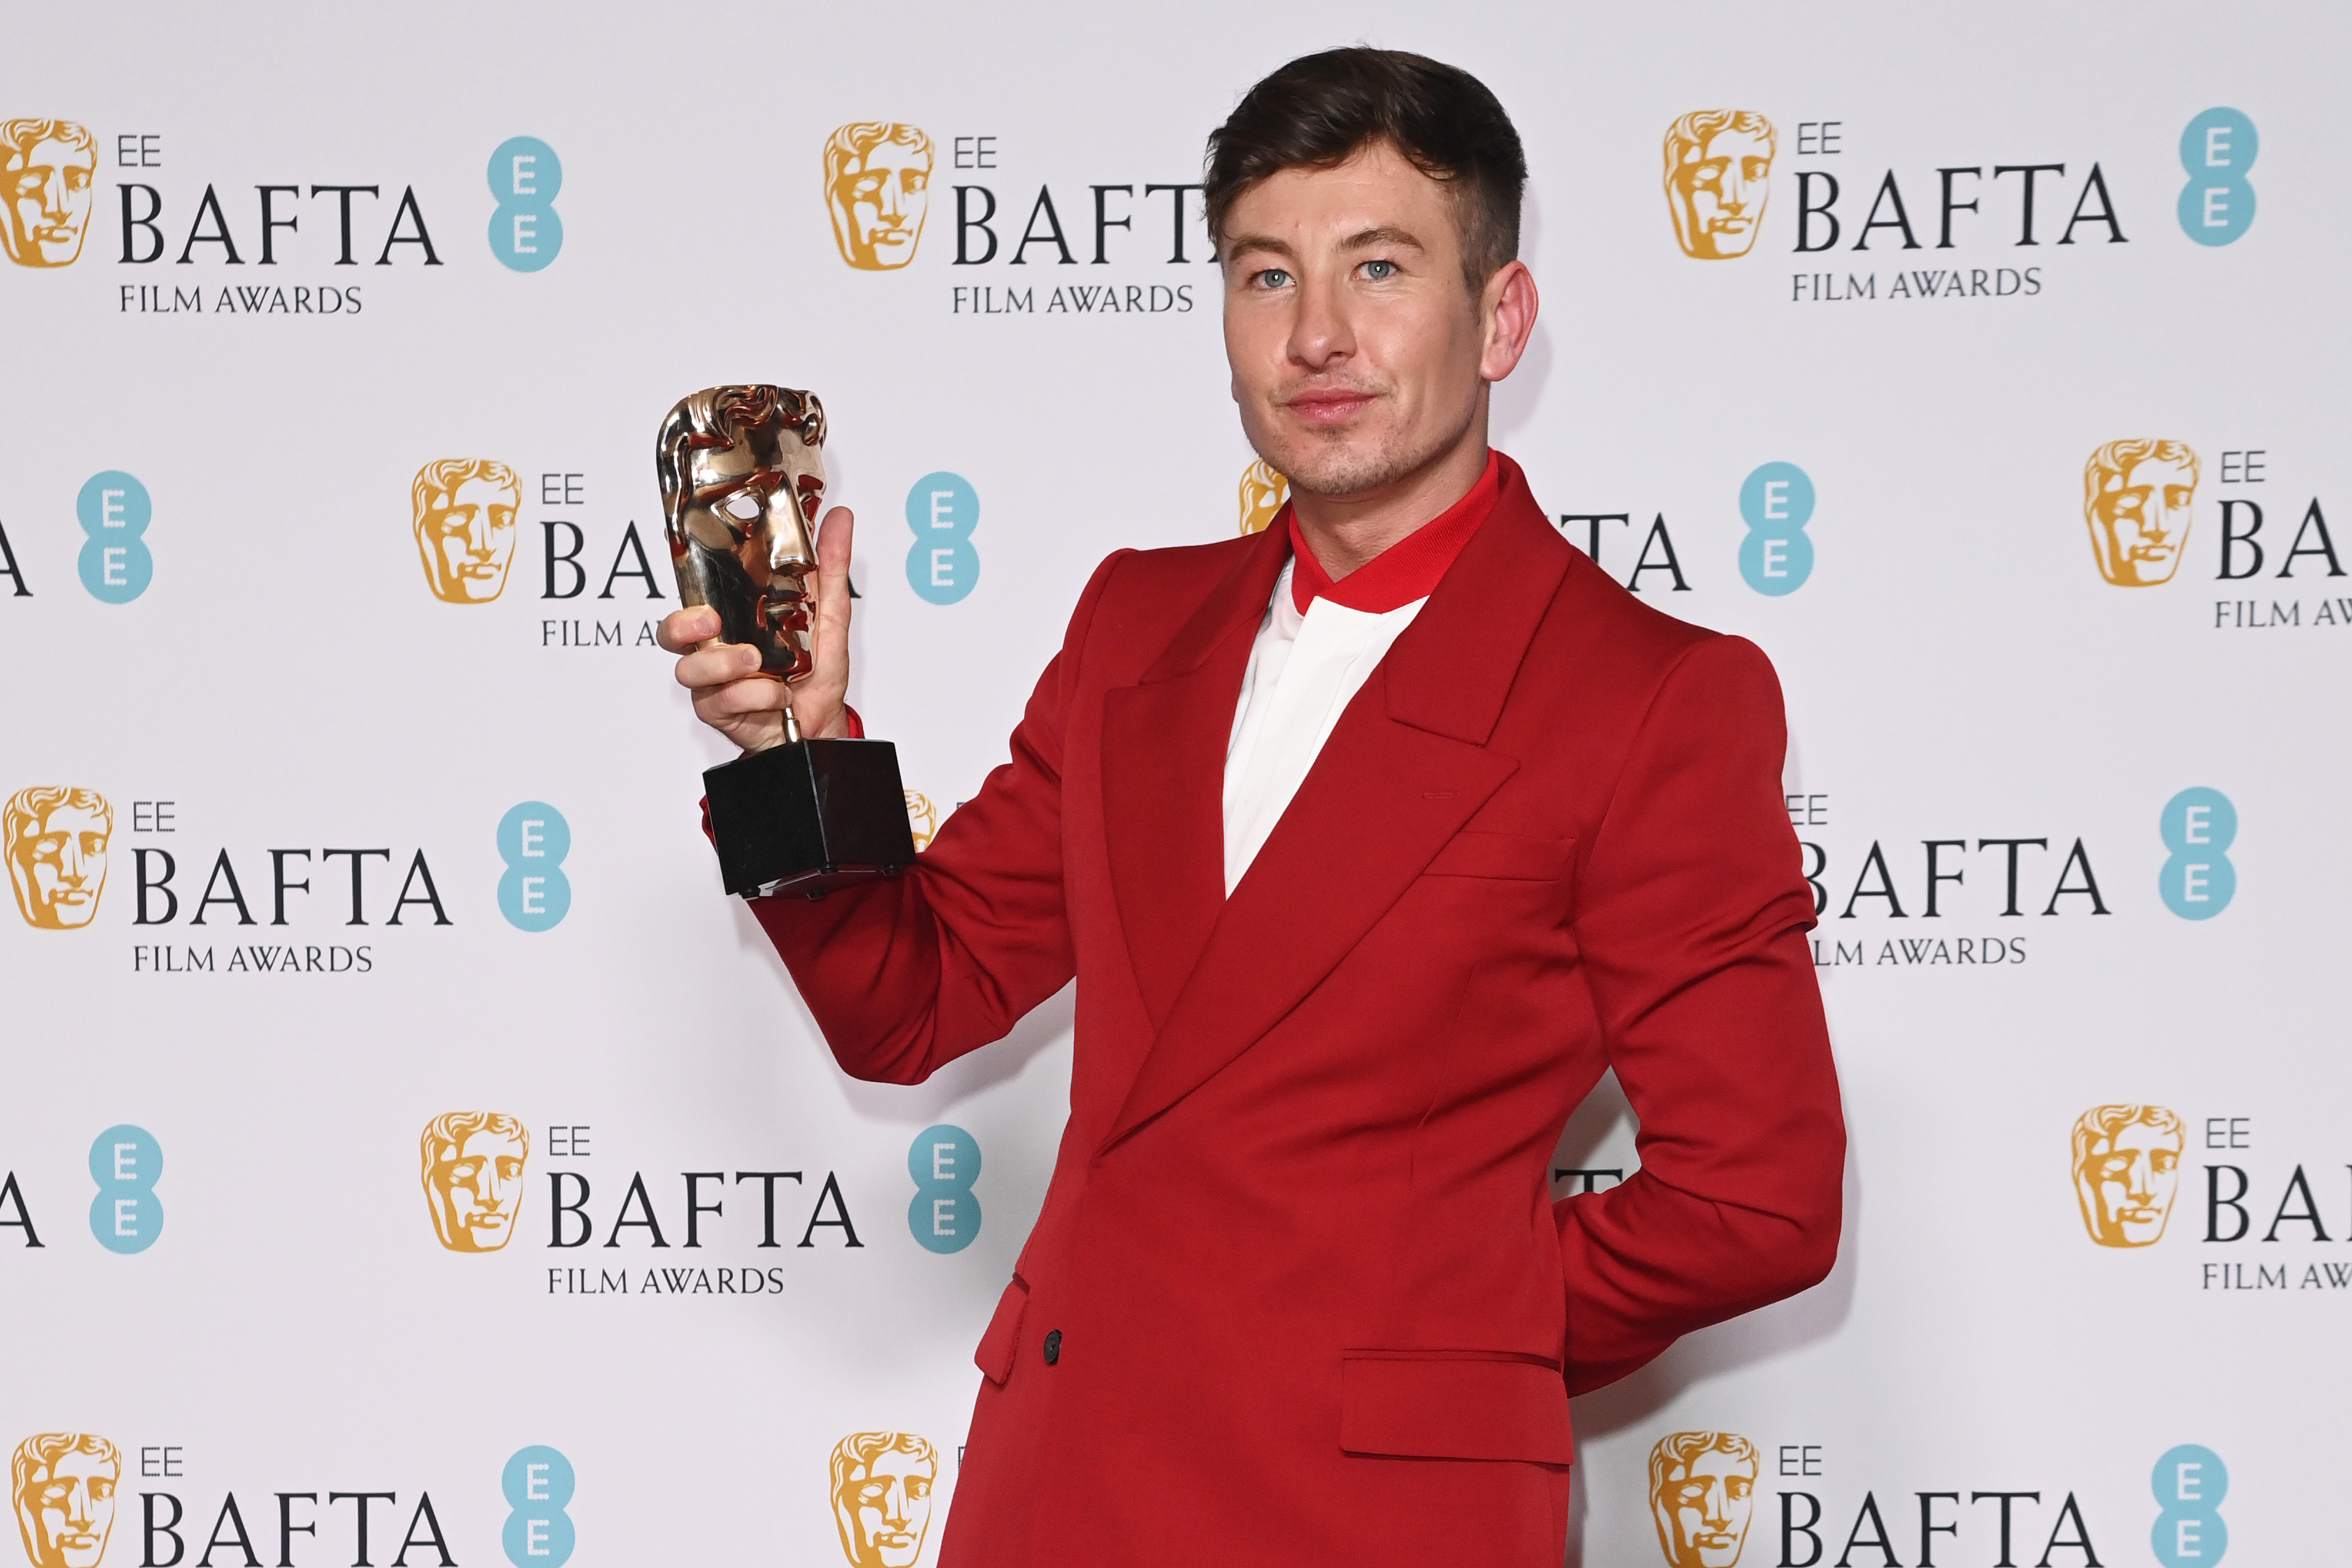 closeup of him holding up his BAFTA award